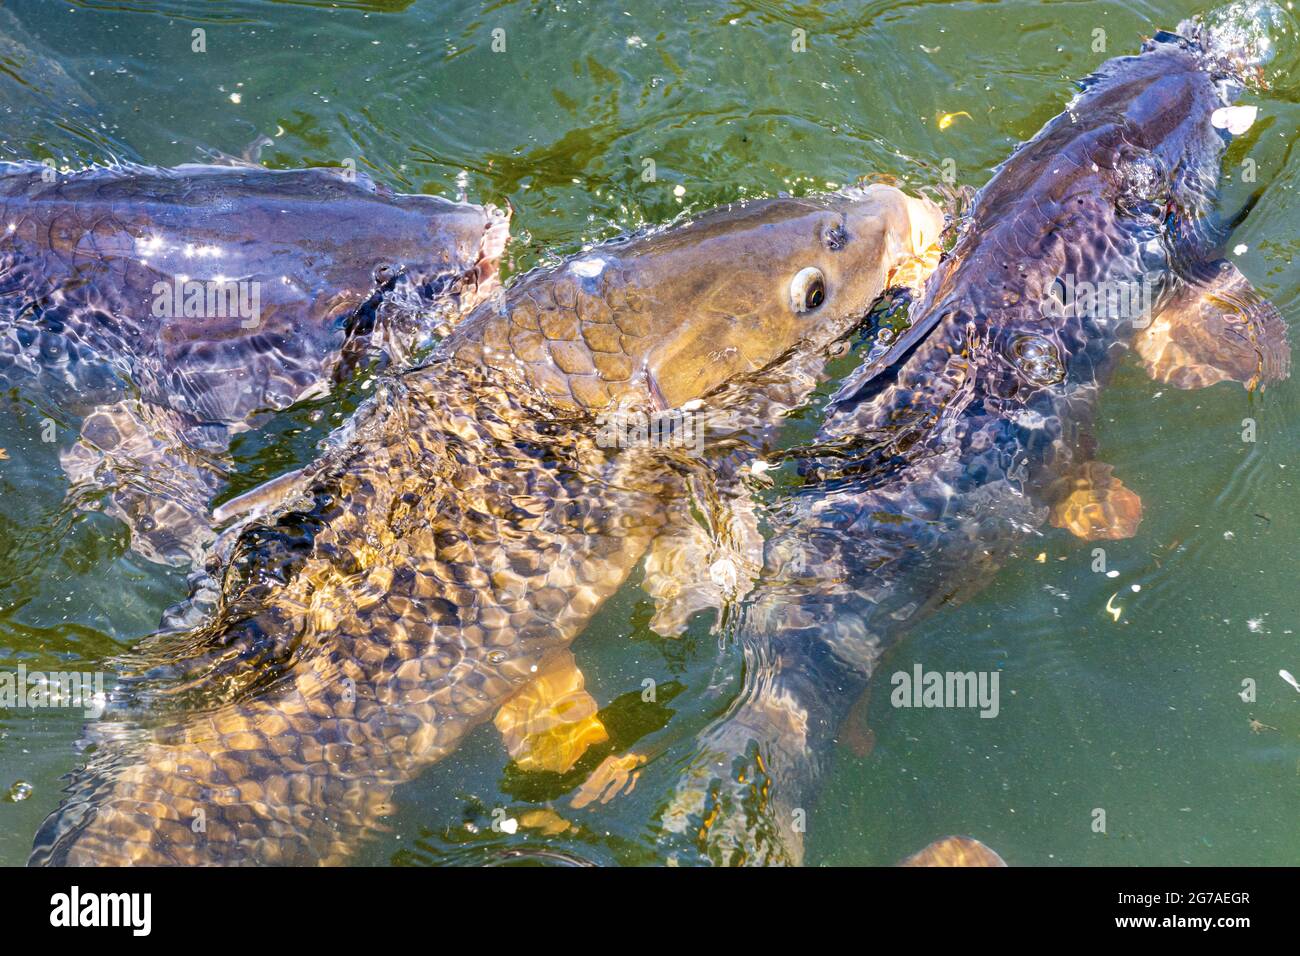 Vienna, common carp or European carp (Cyprinus carpio) fighting for feed, oxbow lake Kaiserwasser in 22. Donaustadt, Wien / Vienna, Austria Stock Photo